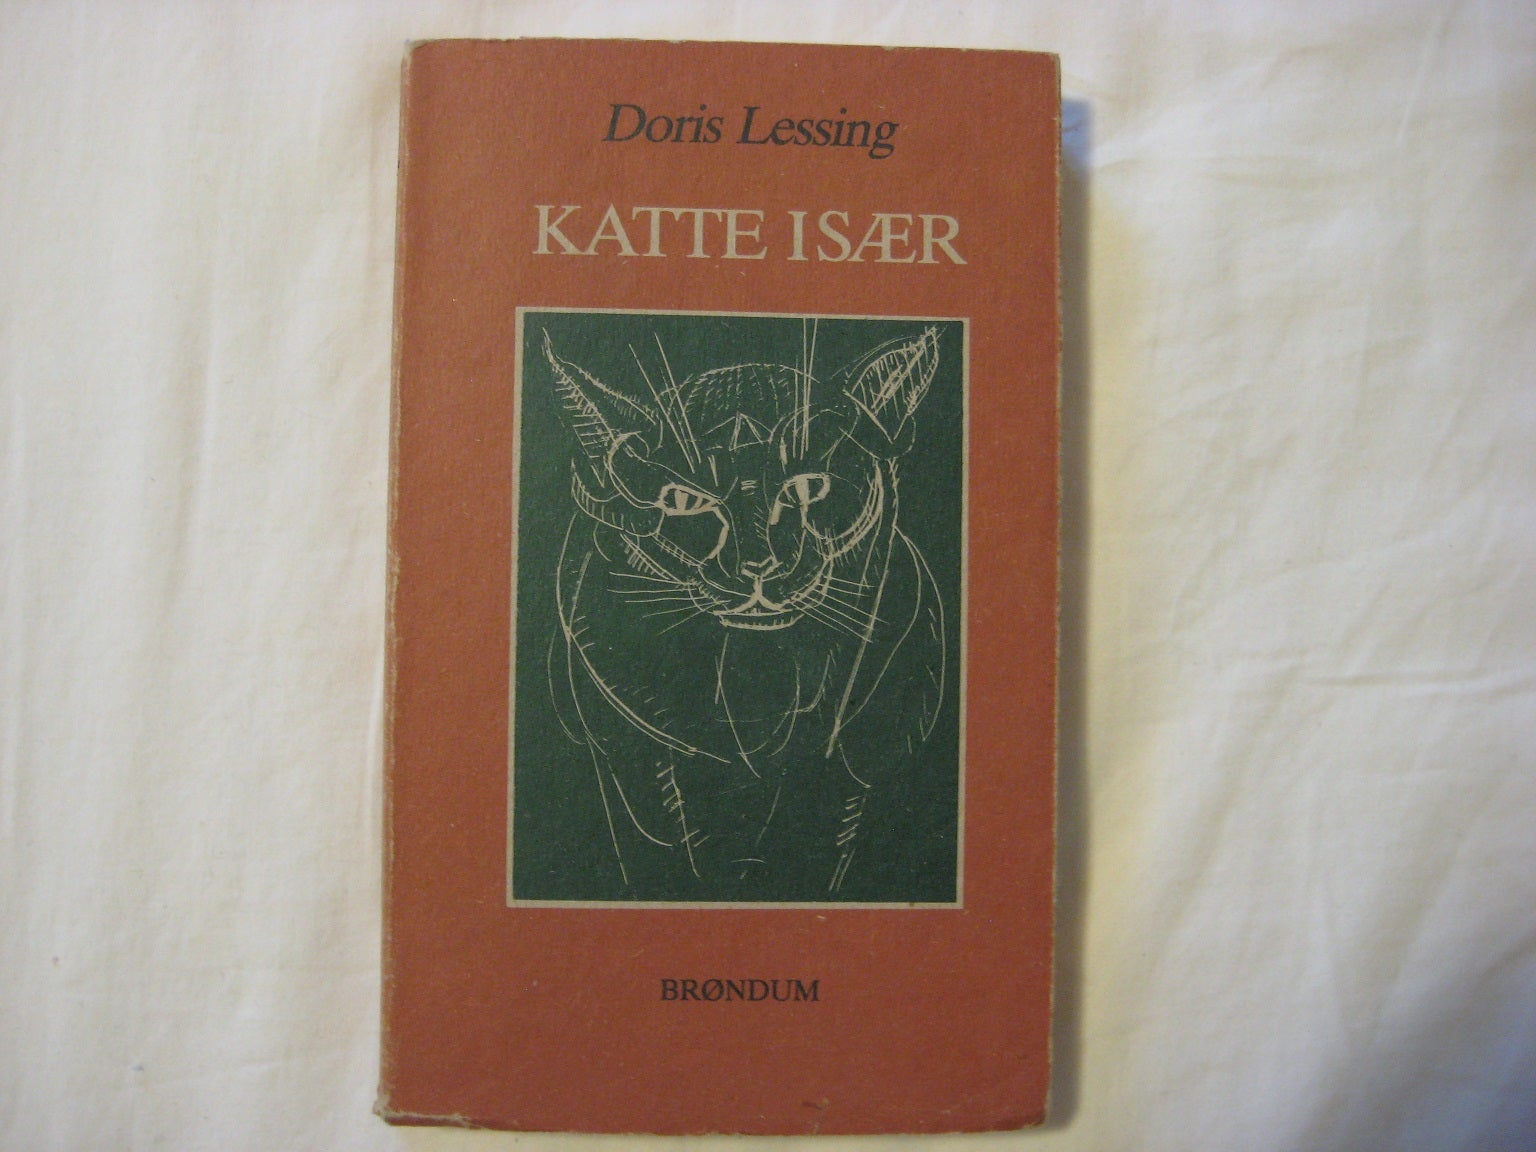 Katte især, Doris Lessing, genre: biografi